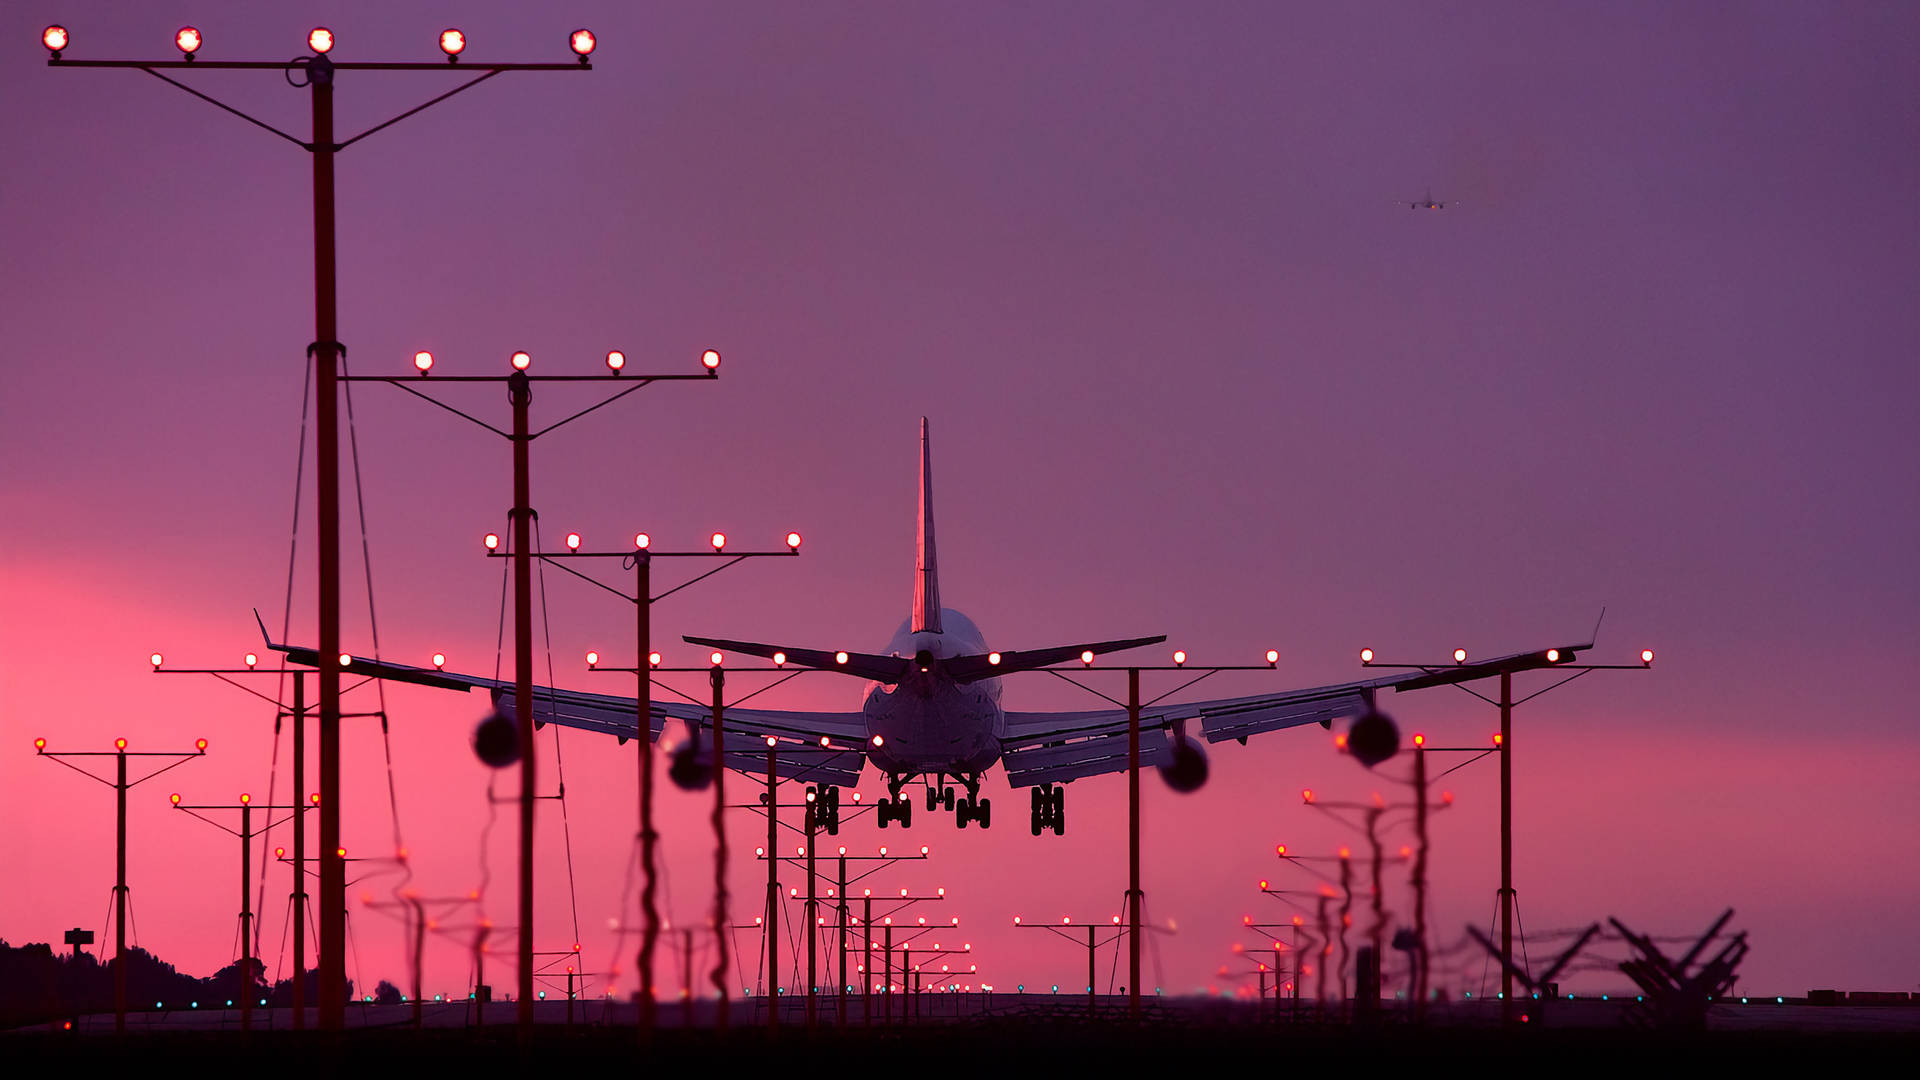 Hd Plane Landing Sunset Background